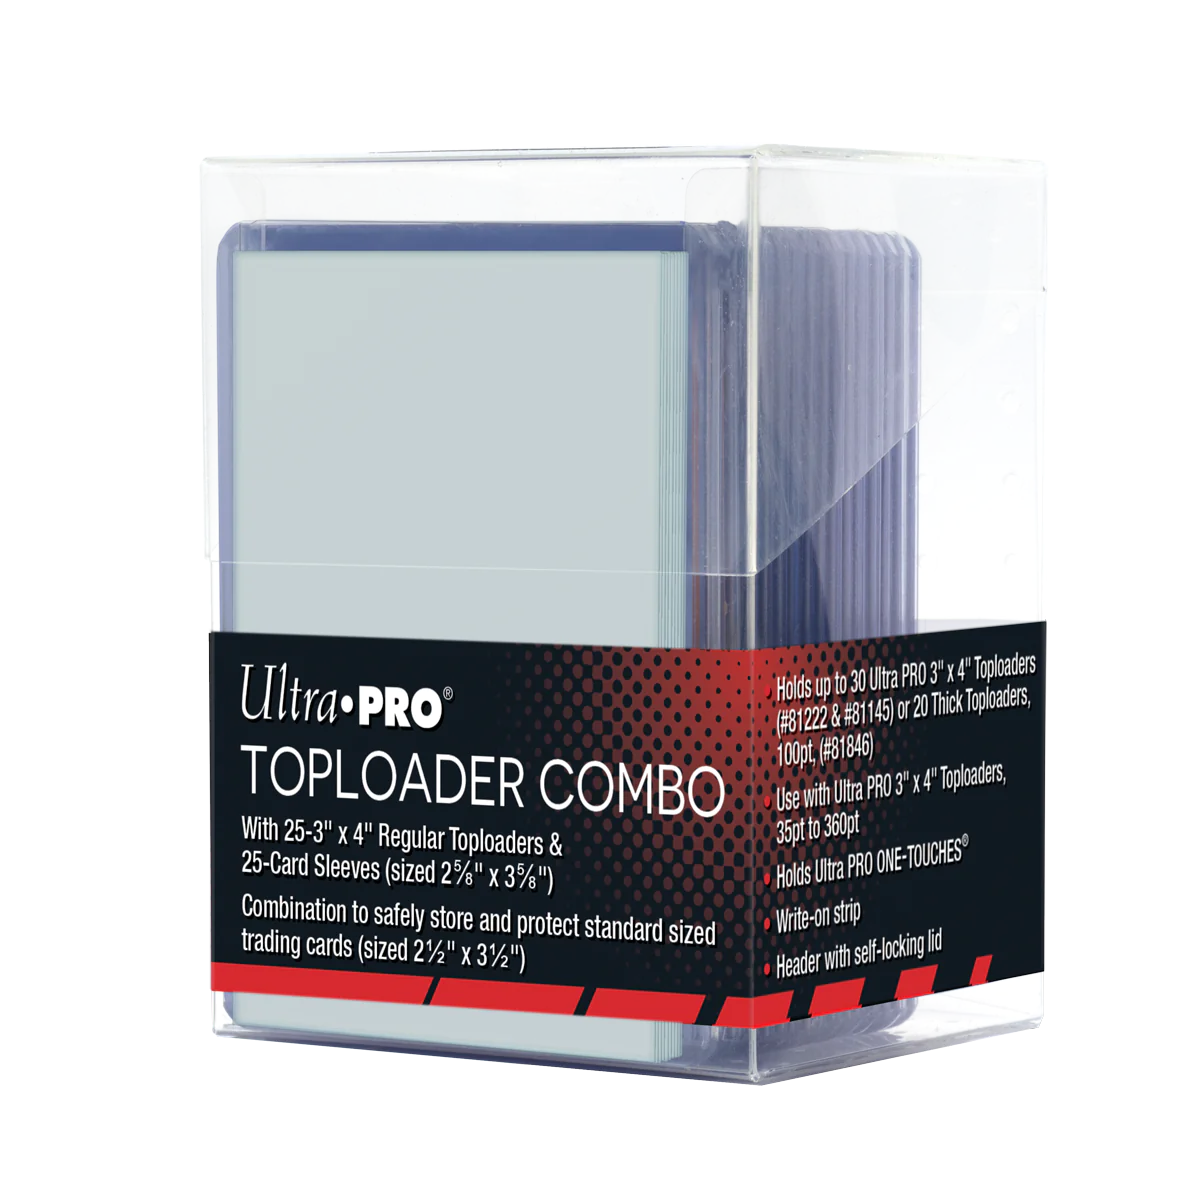 Ultra Pro: Toploader Combo